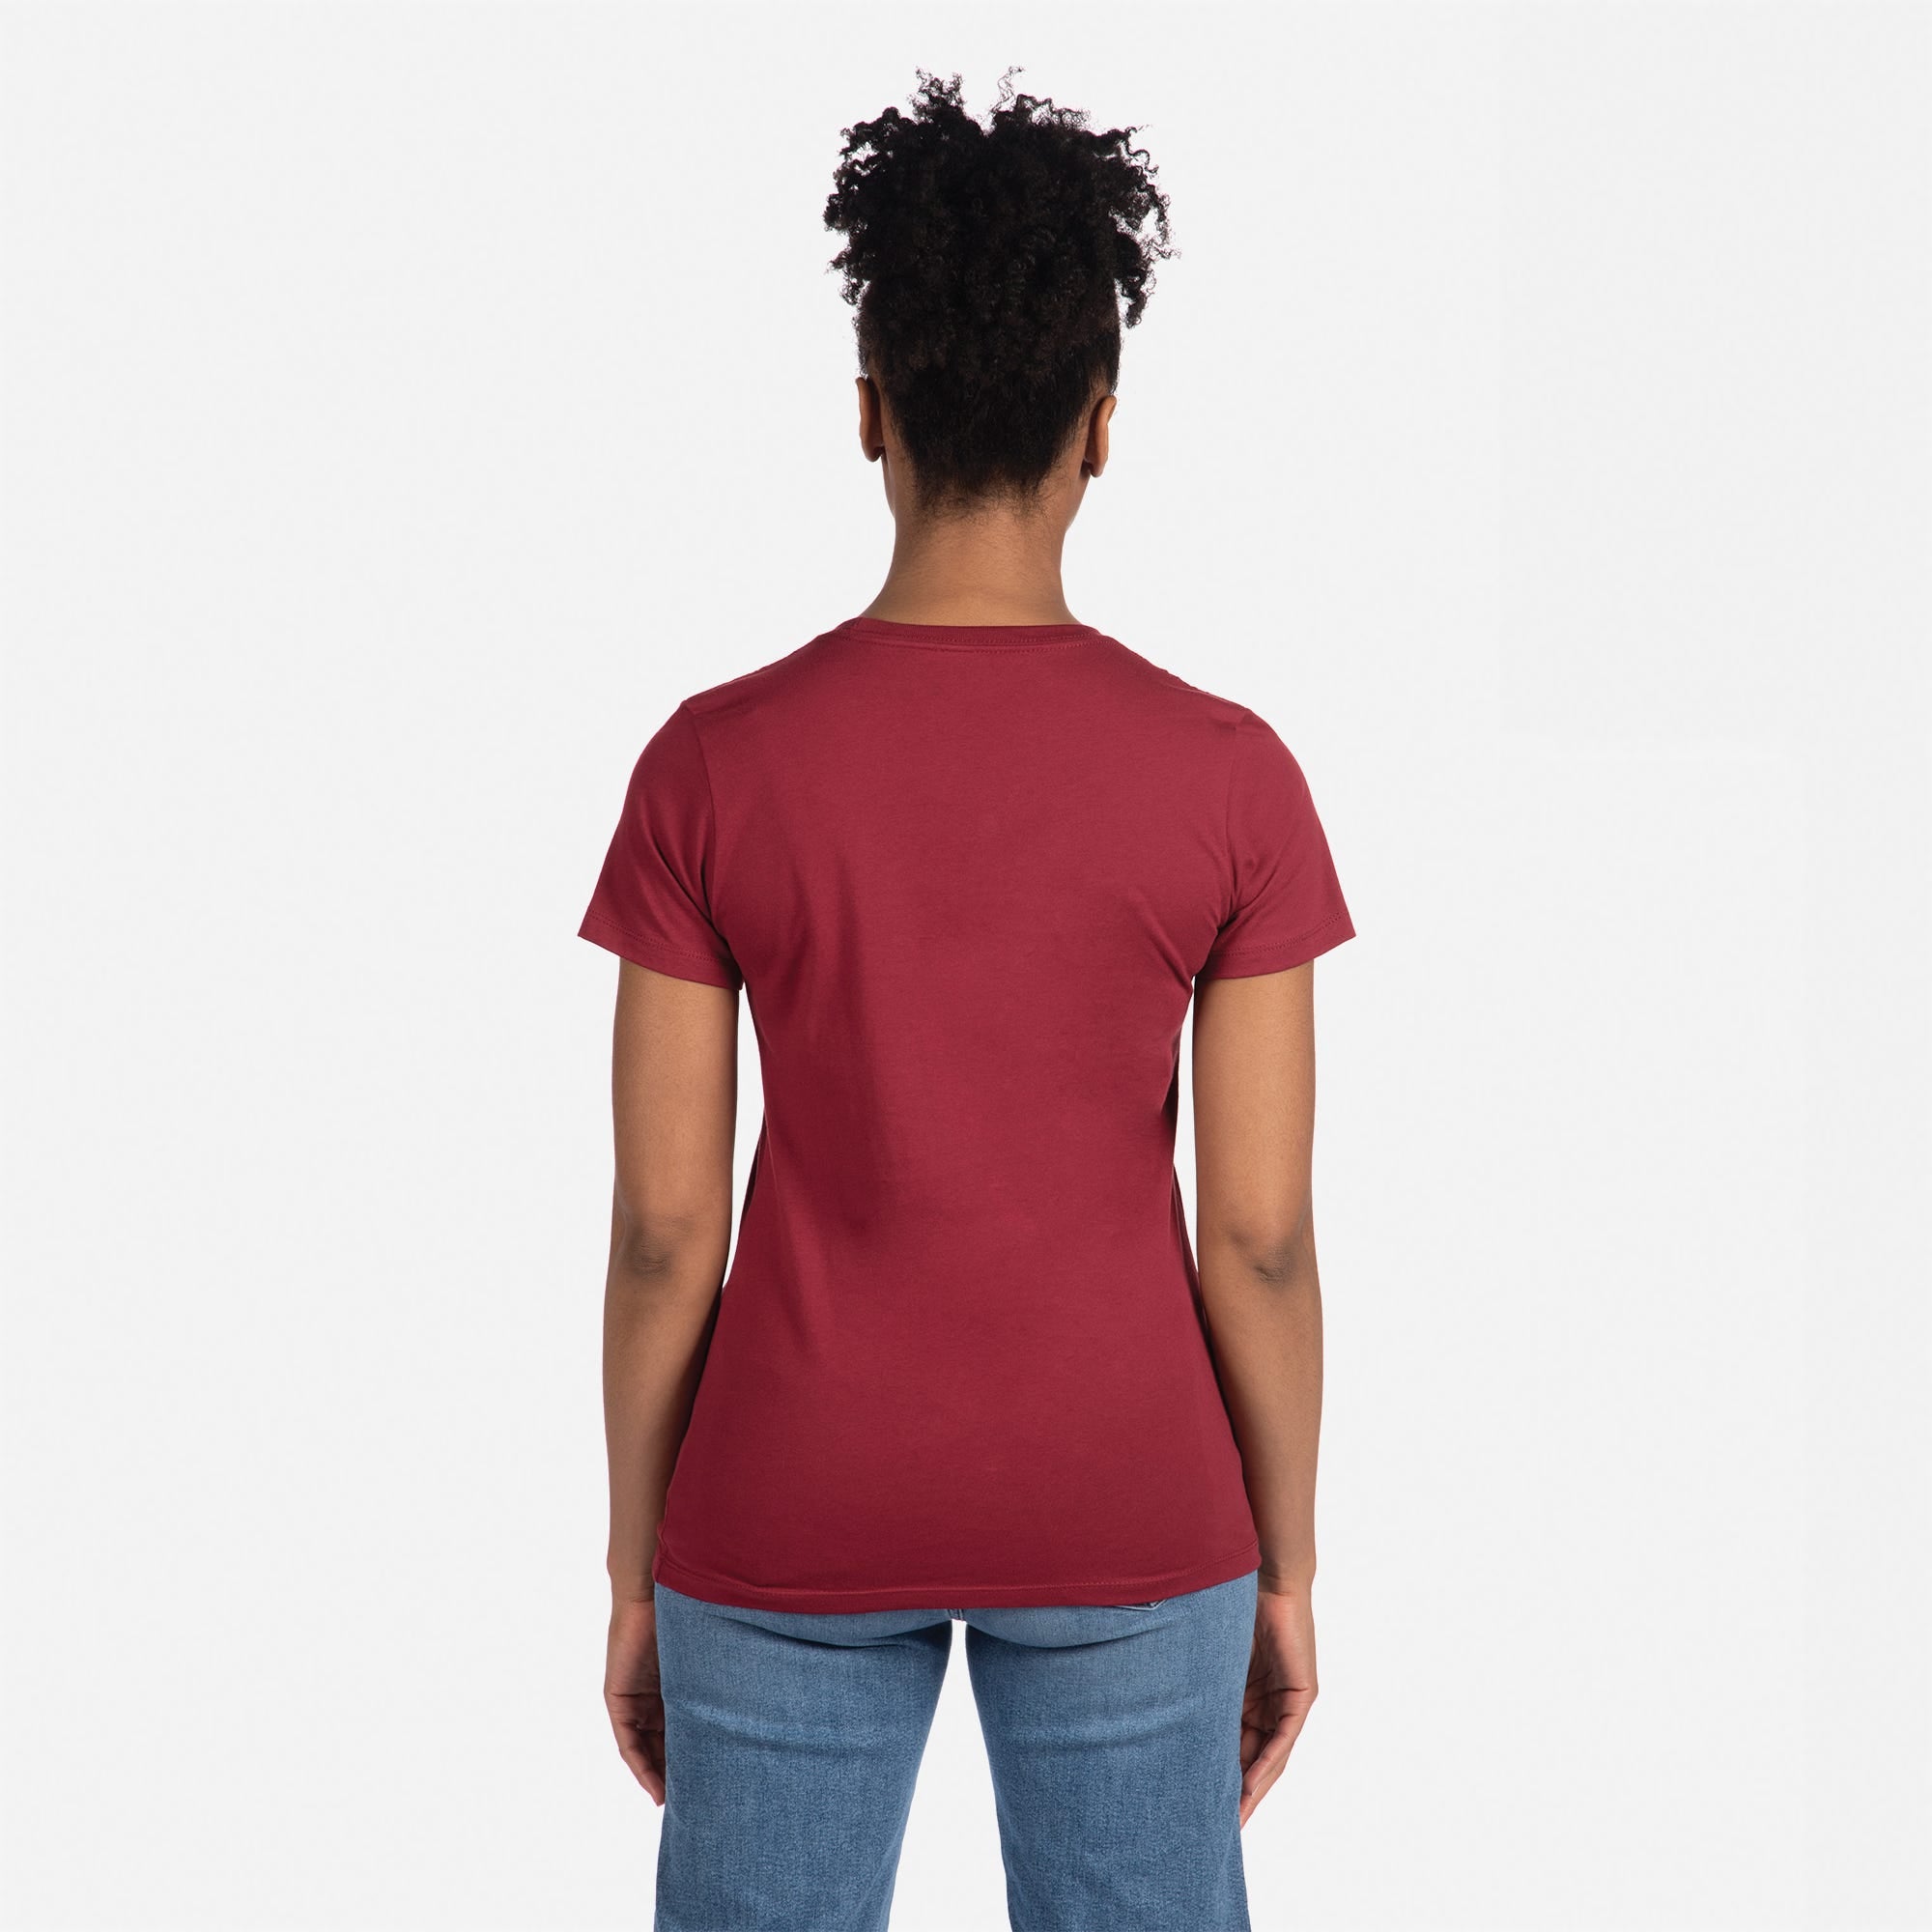 Cotton Boyfriend T-Shirt Cardinal 3900 Next Level Apparel Back View